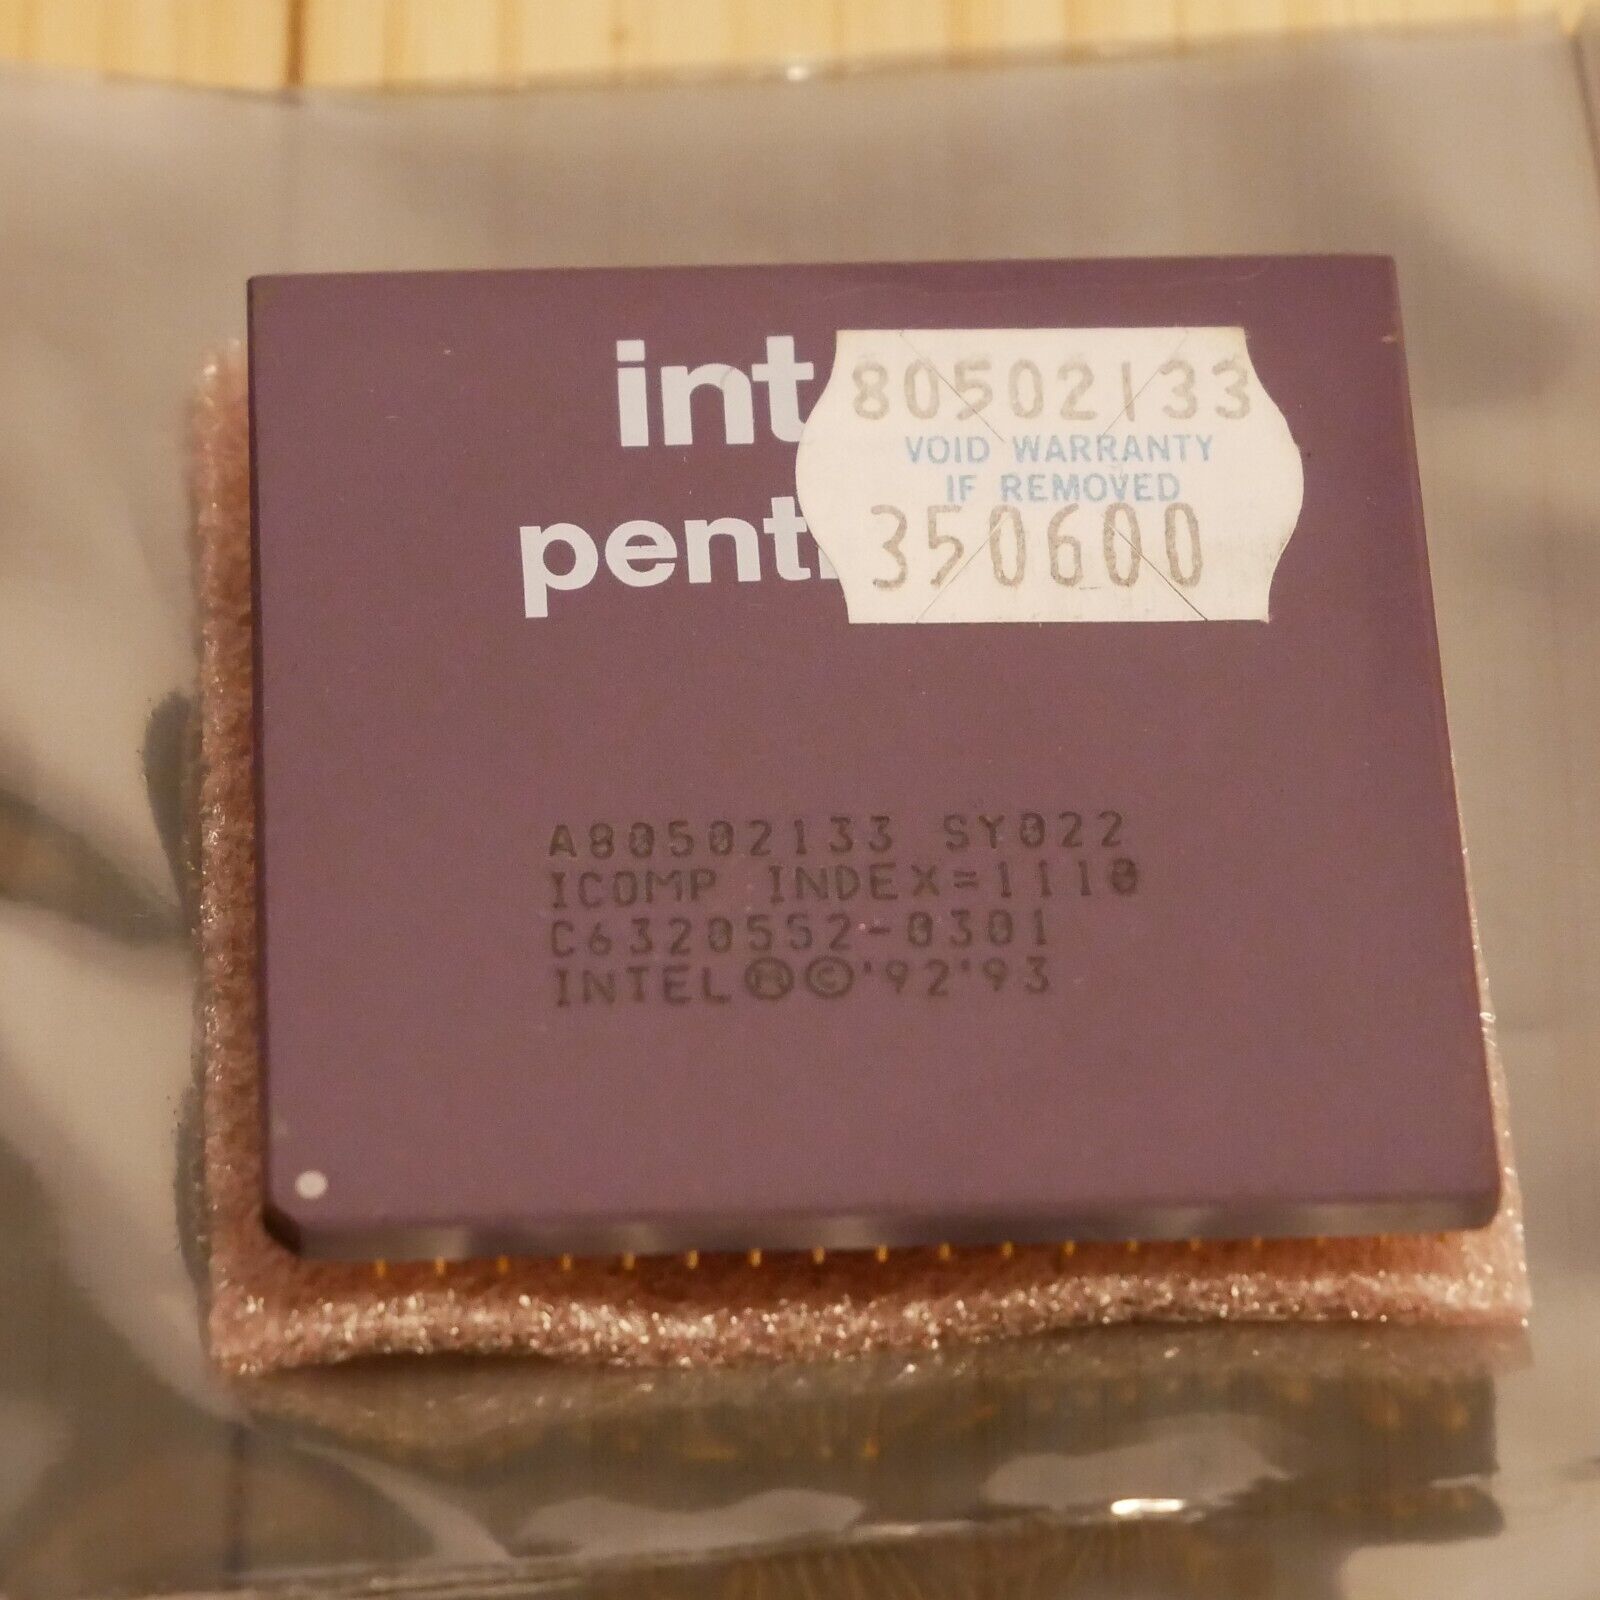 Intel Pentium A80502133 133MHz CPU Processor Socket 7 Tested & Working 03